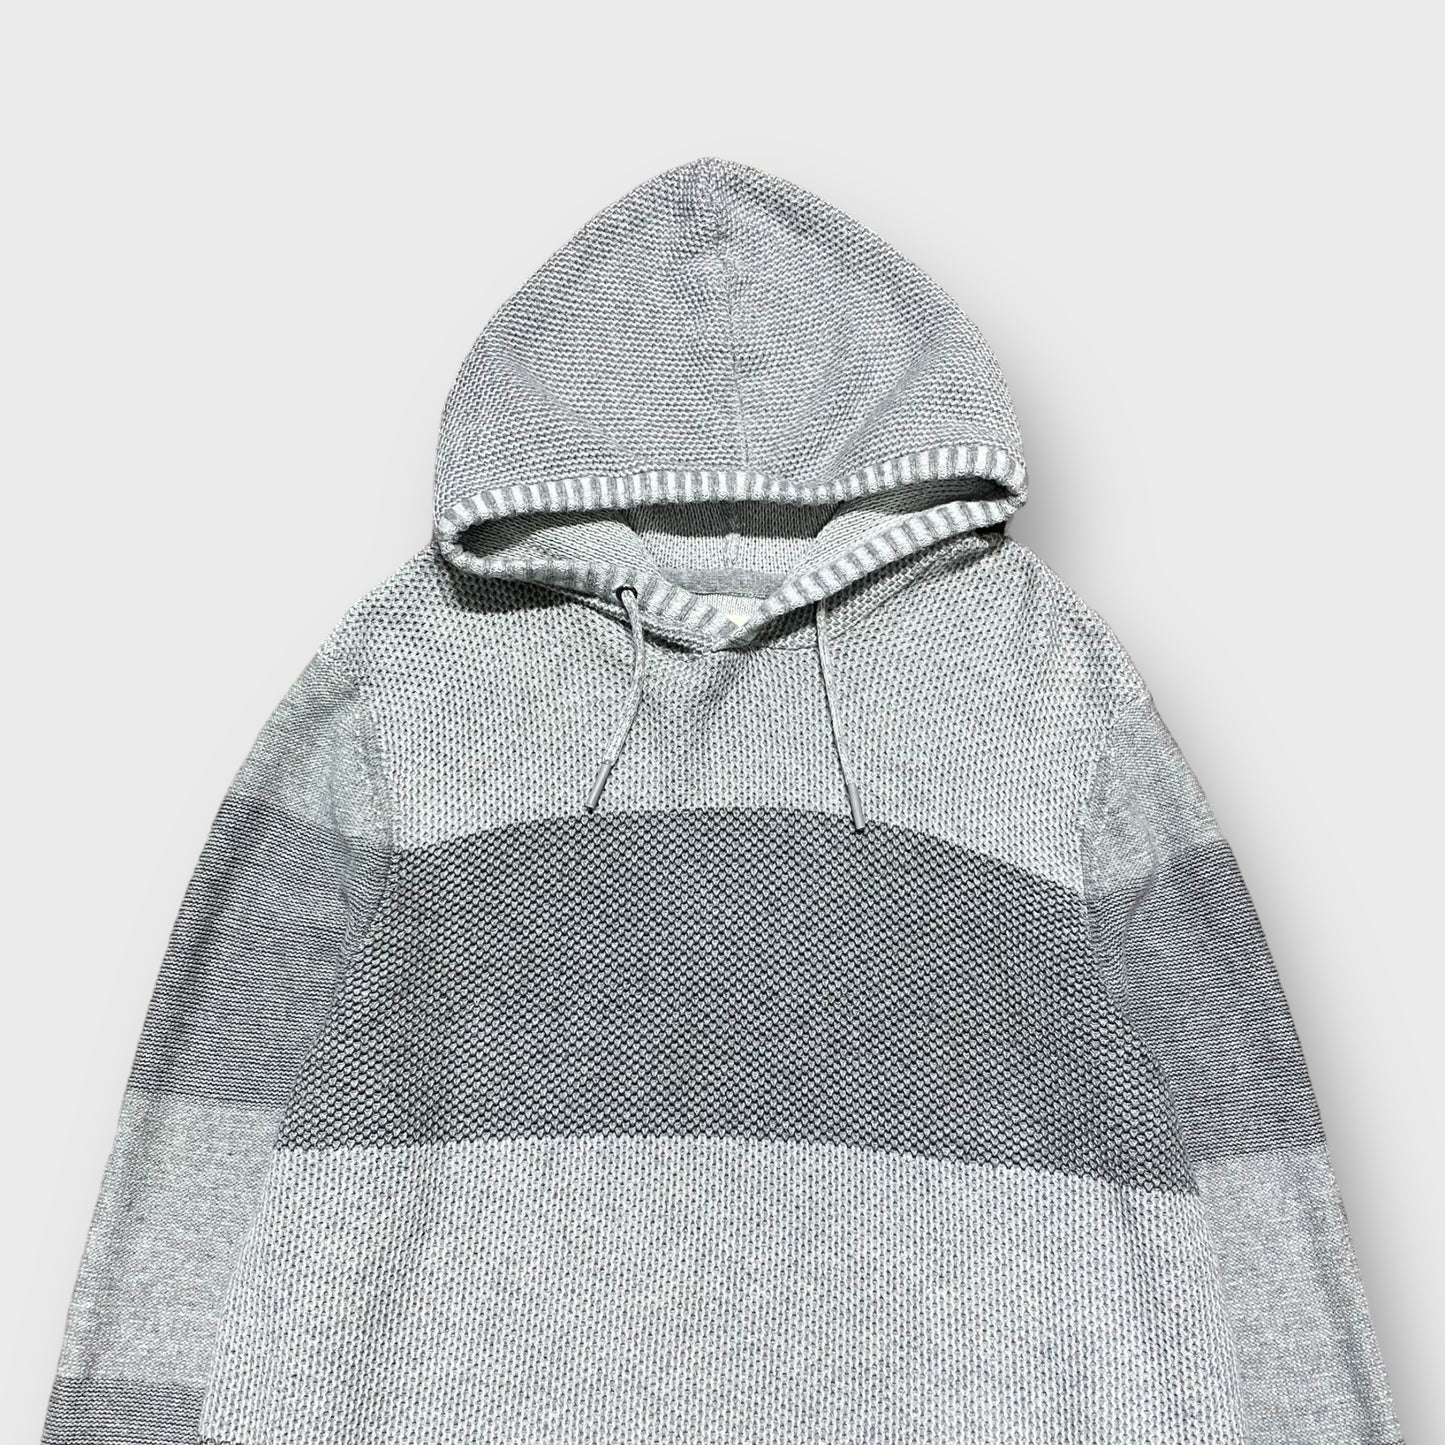 00's "urban pipeline" Border pattern knit hoodie